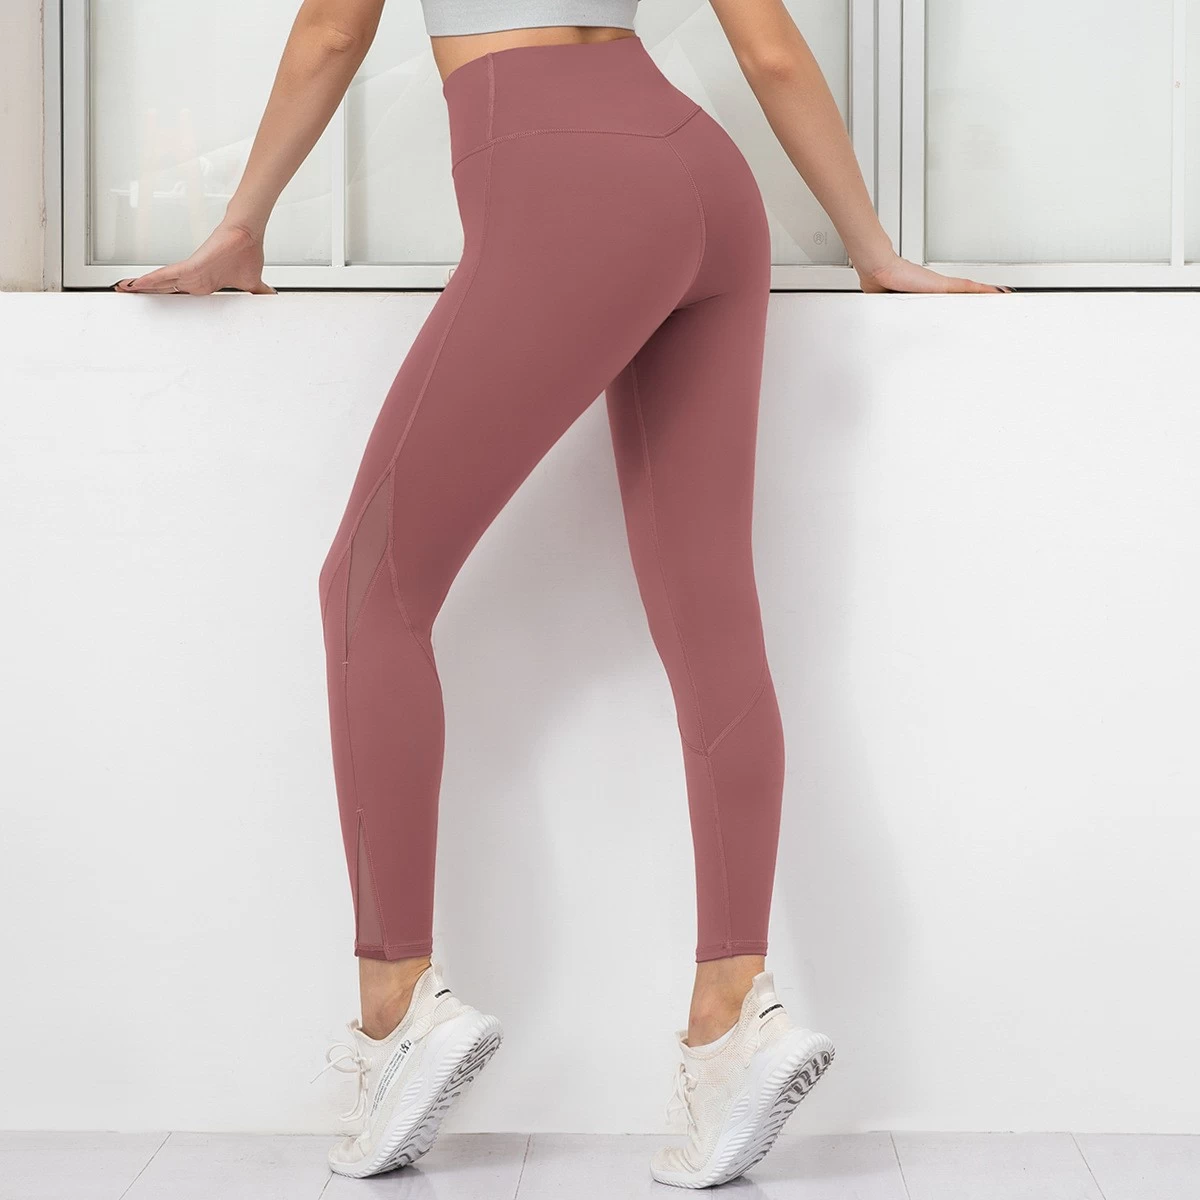 S-SHAPER Seamless Yoga Pants for Women Running Workout Mesh Leggings High Waist Nudity Fitness Sexy Leggings